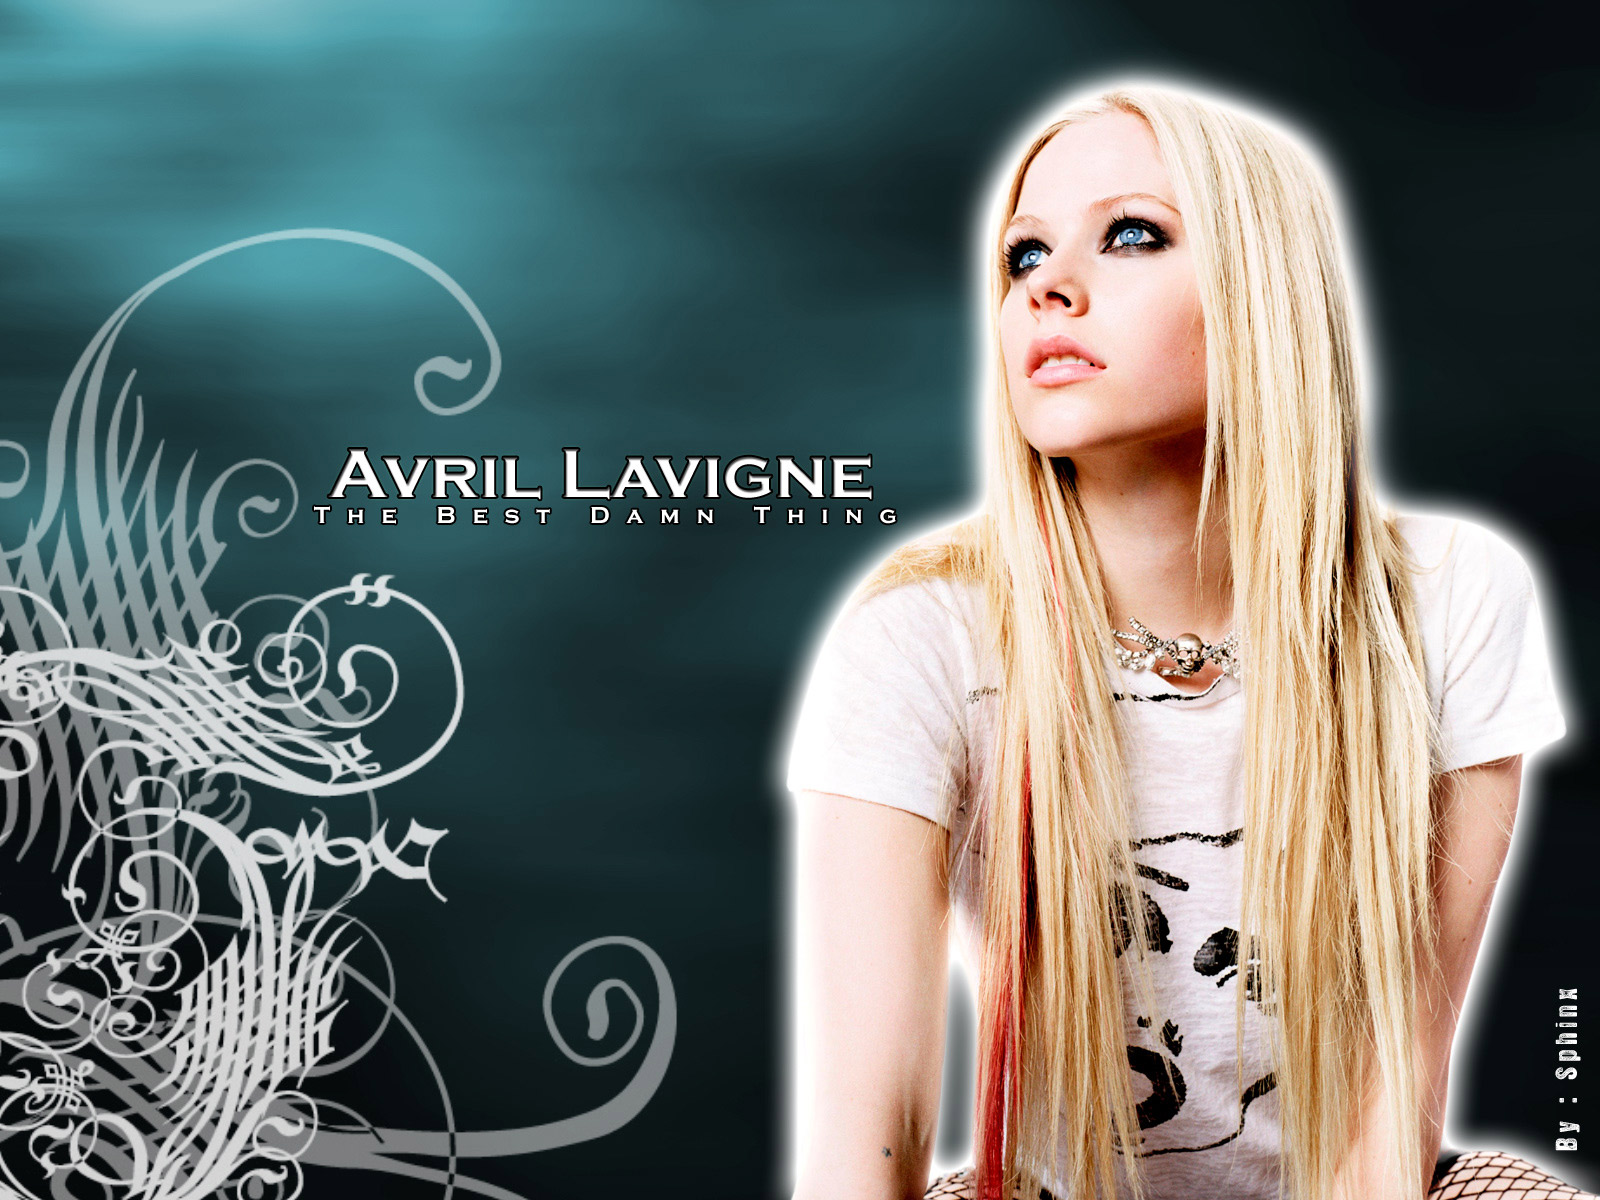 https://blogger.googleusercontent.com/img/b/R29vZ2xl/AVvXsEiU99ALAgWQhCk0F-yenkZfKpsoASQn51fqr629AXLiSycfxU98aBrgu0SHlImy7Twzqzql6bCIXMi3JO29jJT1CrkKf1Qg0nDrwiLRBbBLUGcarDTfroYziw1Lq072JTnkQkX5FwE3Mas/s1600/Avril+Lavigne+Wallpaper+%283%29.jpg